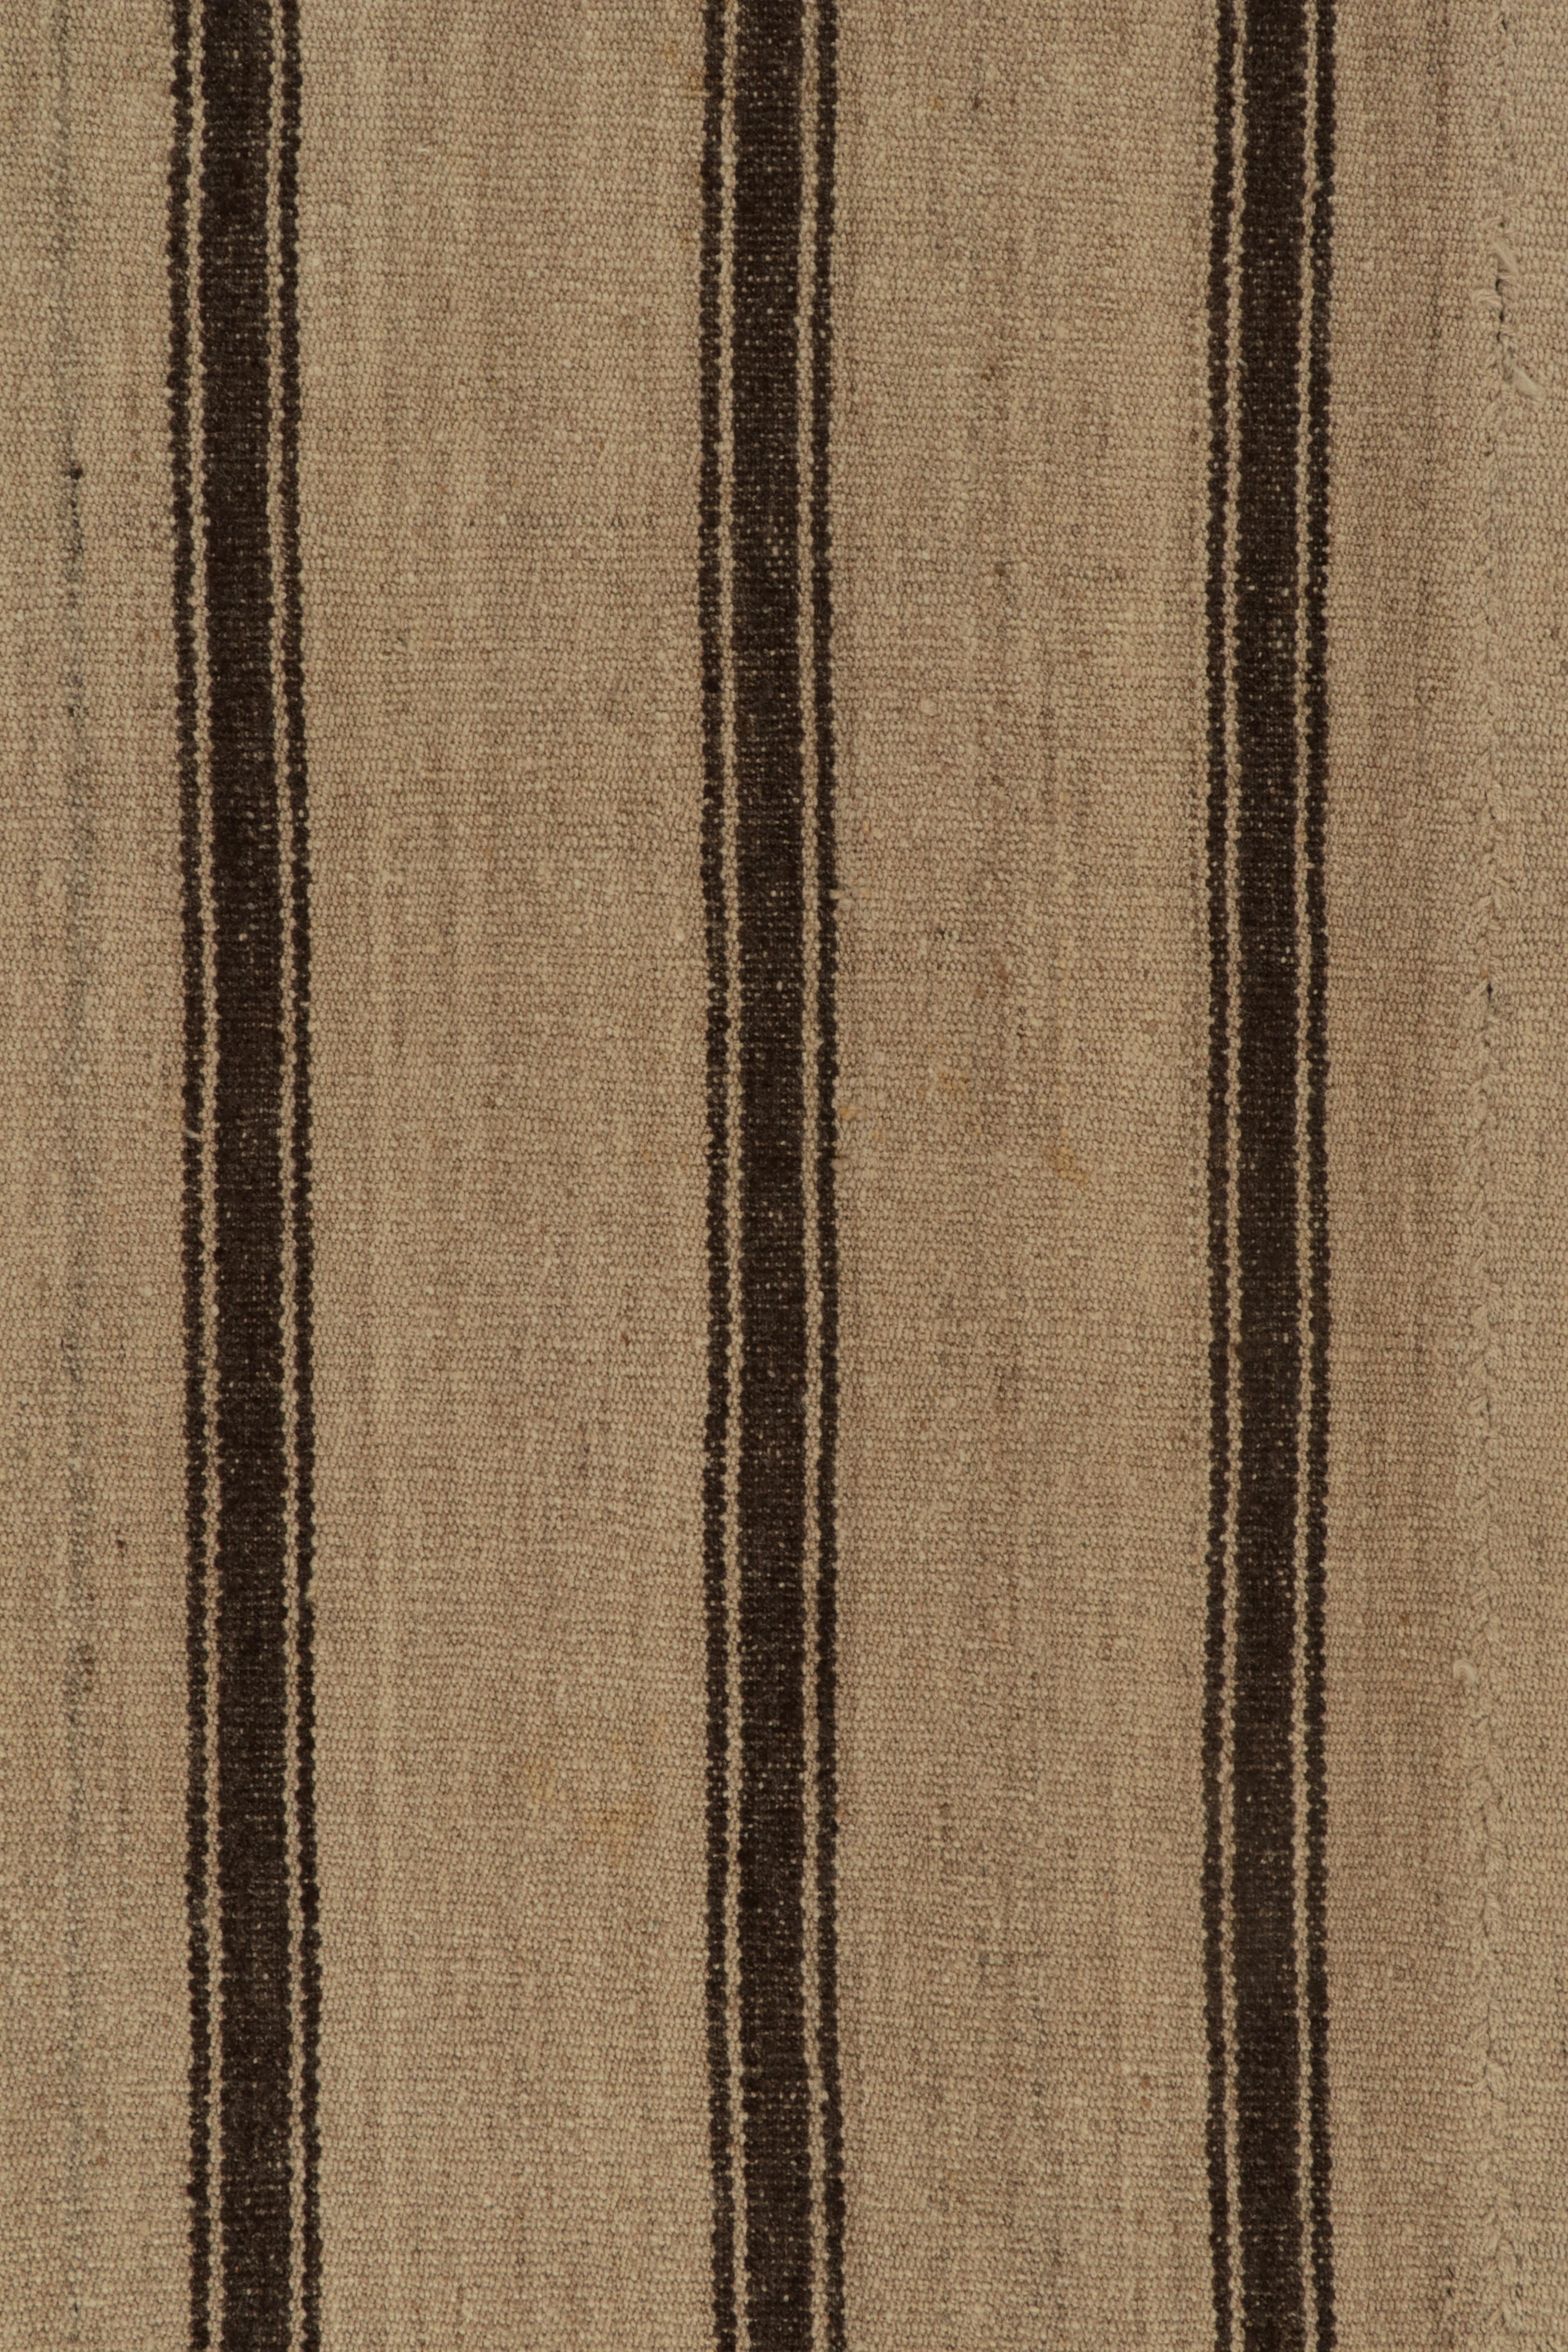 Mid-20th Century Handwoven Vintage Kilim Beige-Brown Stripe Patterns by Rug & Kilim For Sale